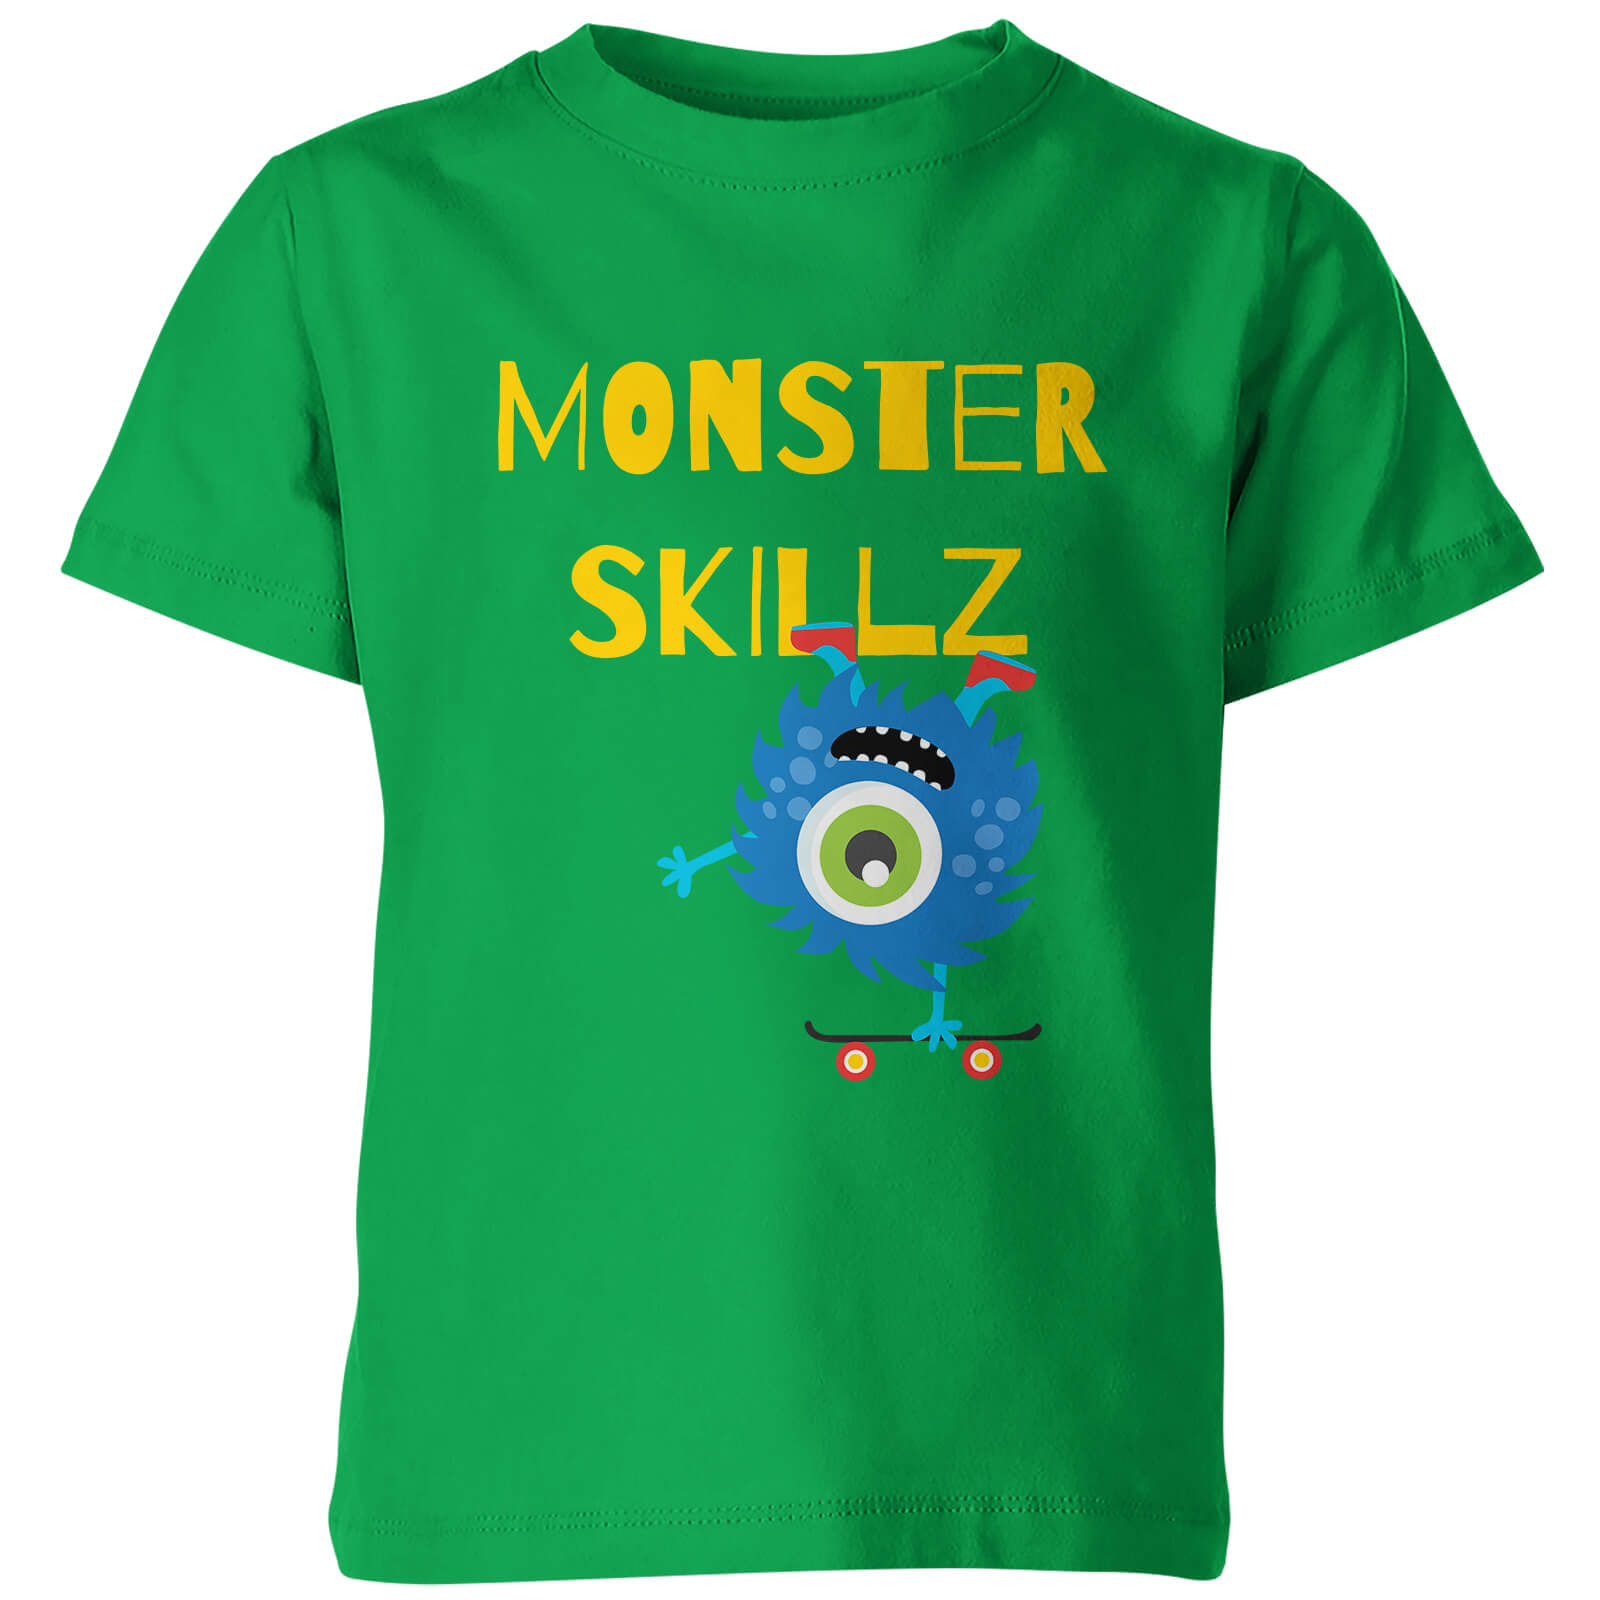 My Little Rascal Kids Monster Skulls Green T Shirt   11 12 Years   Green